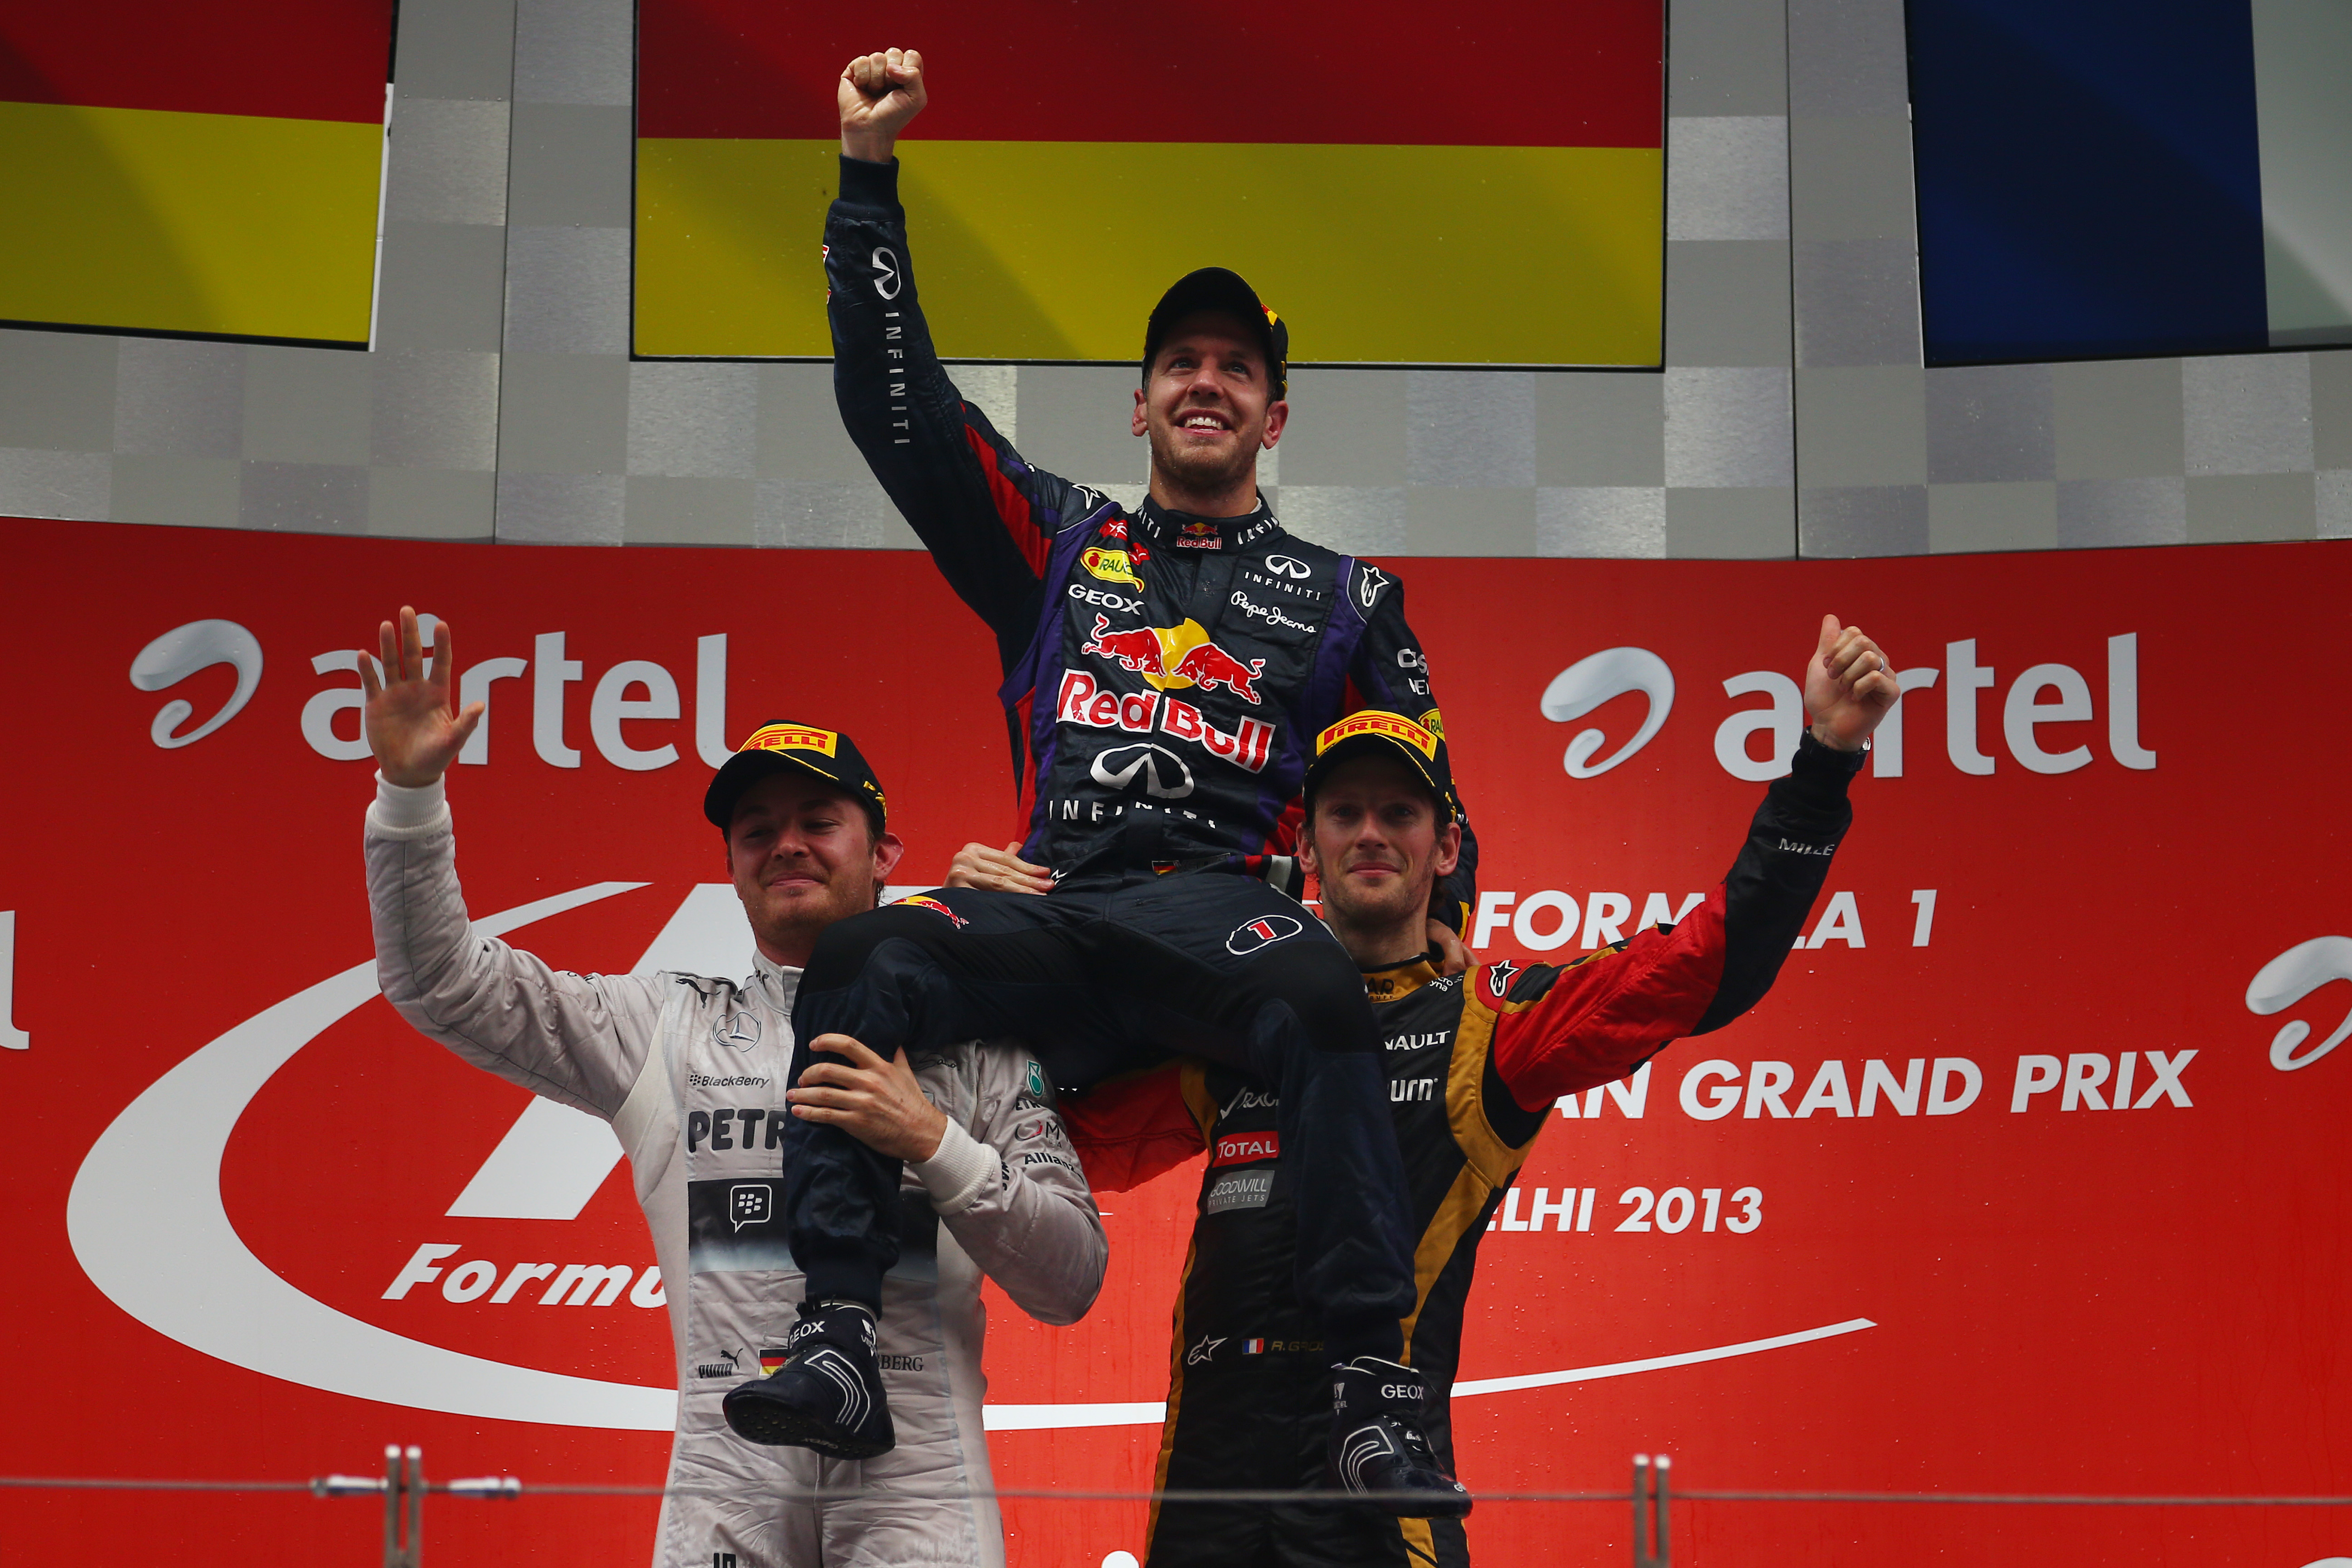 Race: Vettel pakt titel na dominante zege